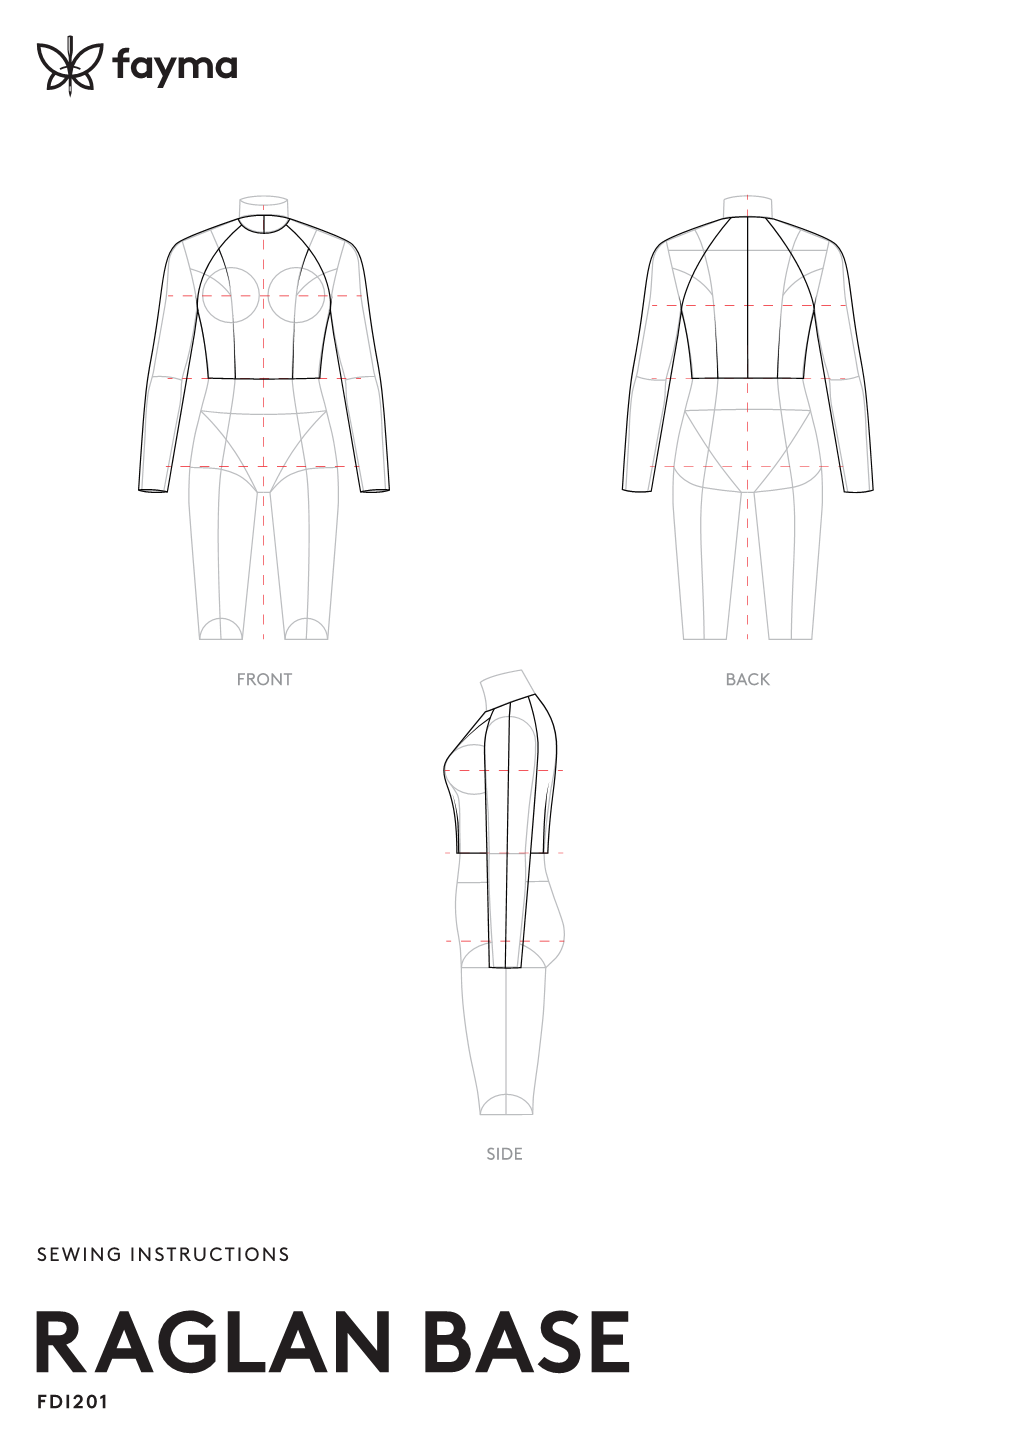 Fdi201 Sewing Instructions